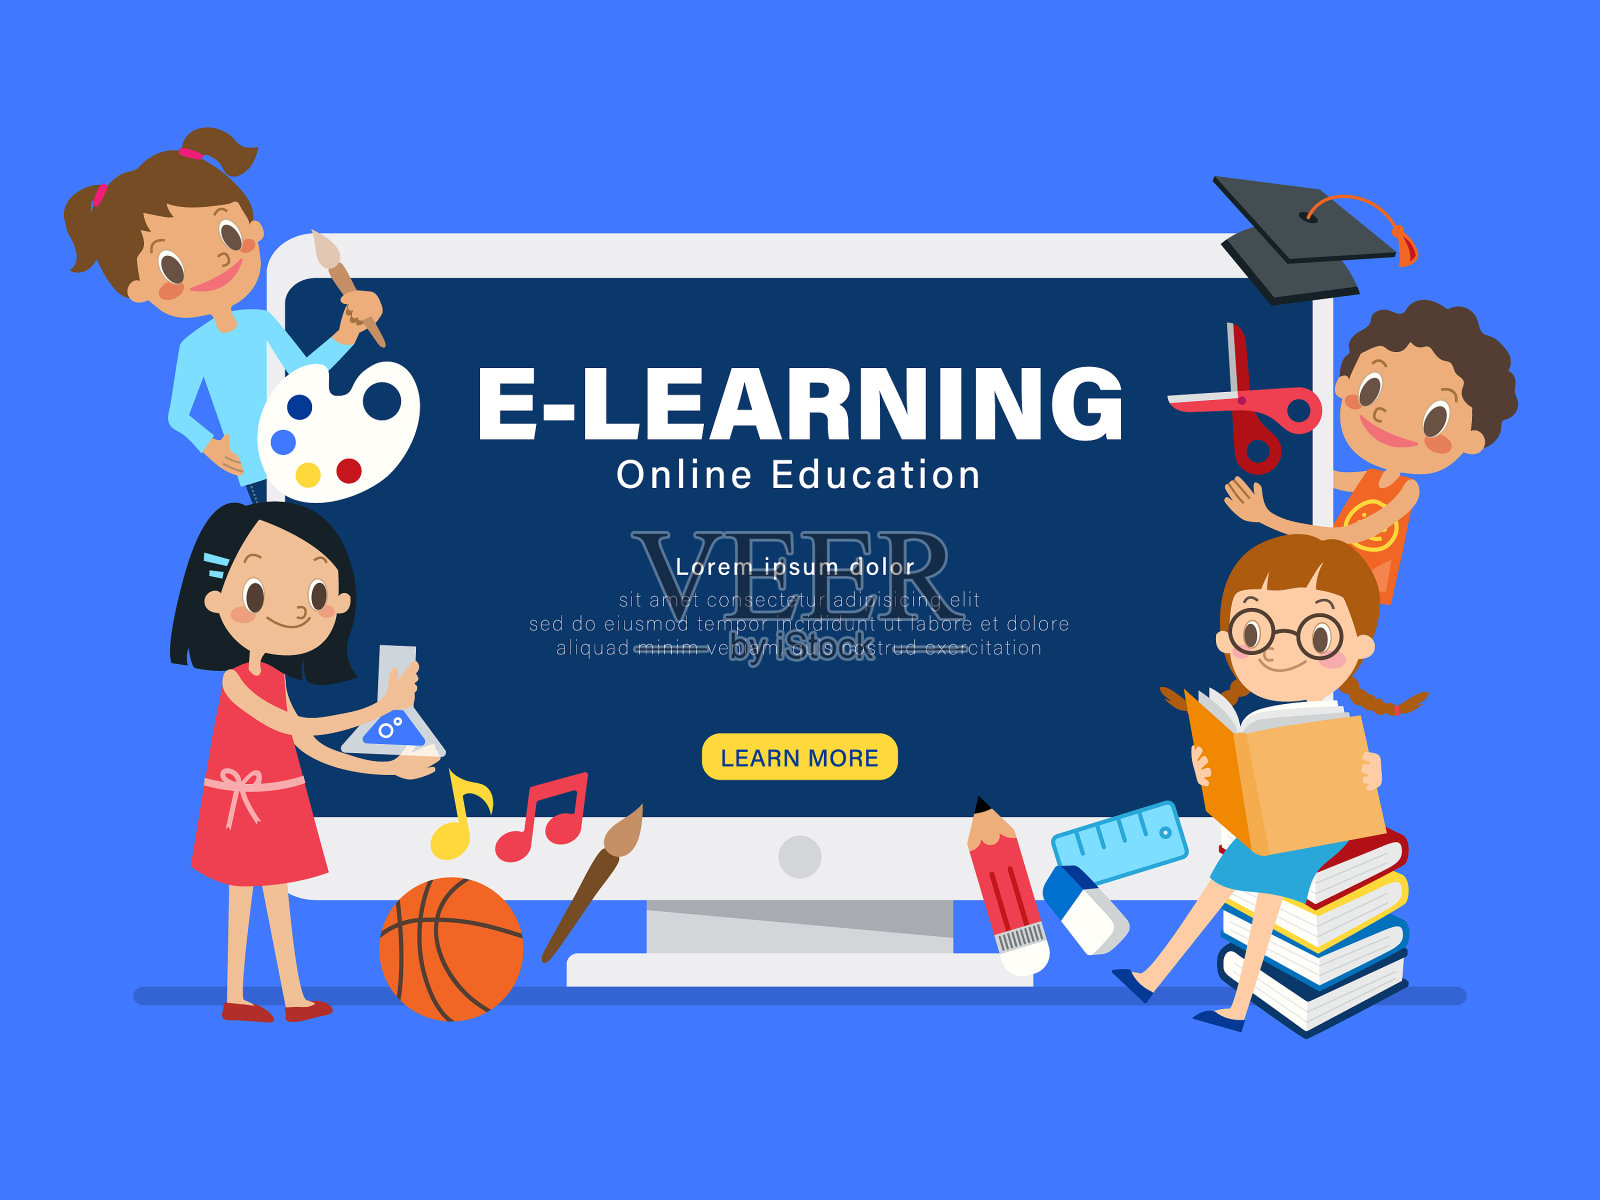 E-learning在线教育概念组插画图片素材